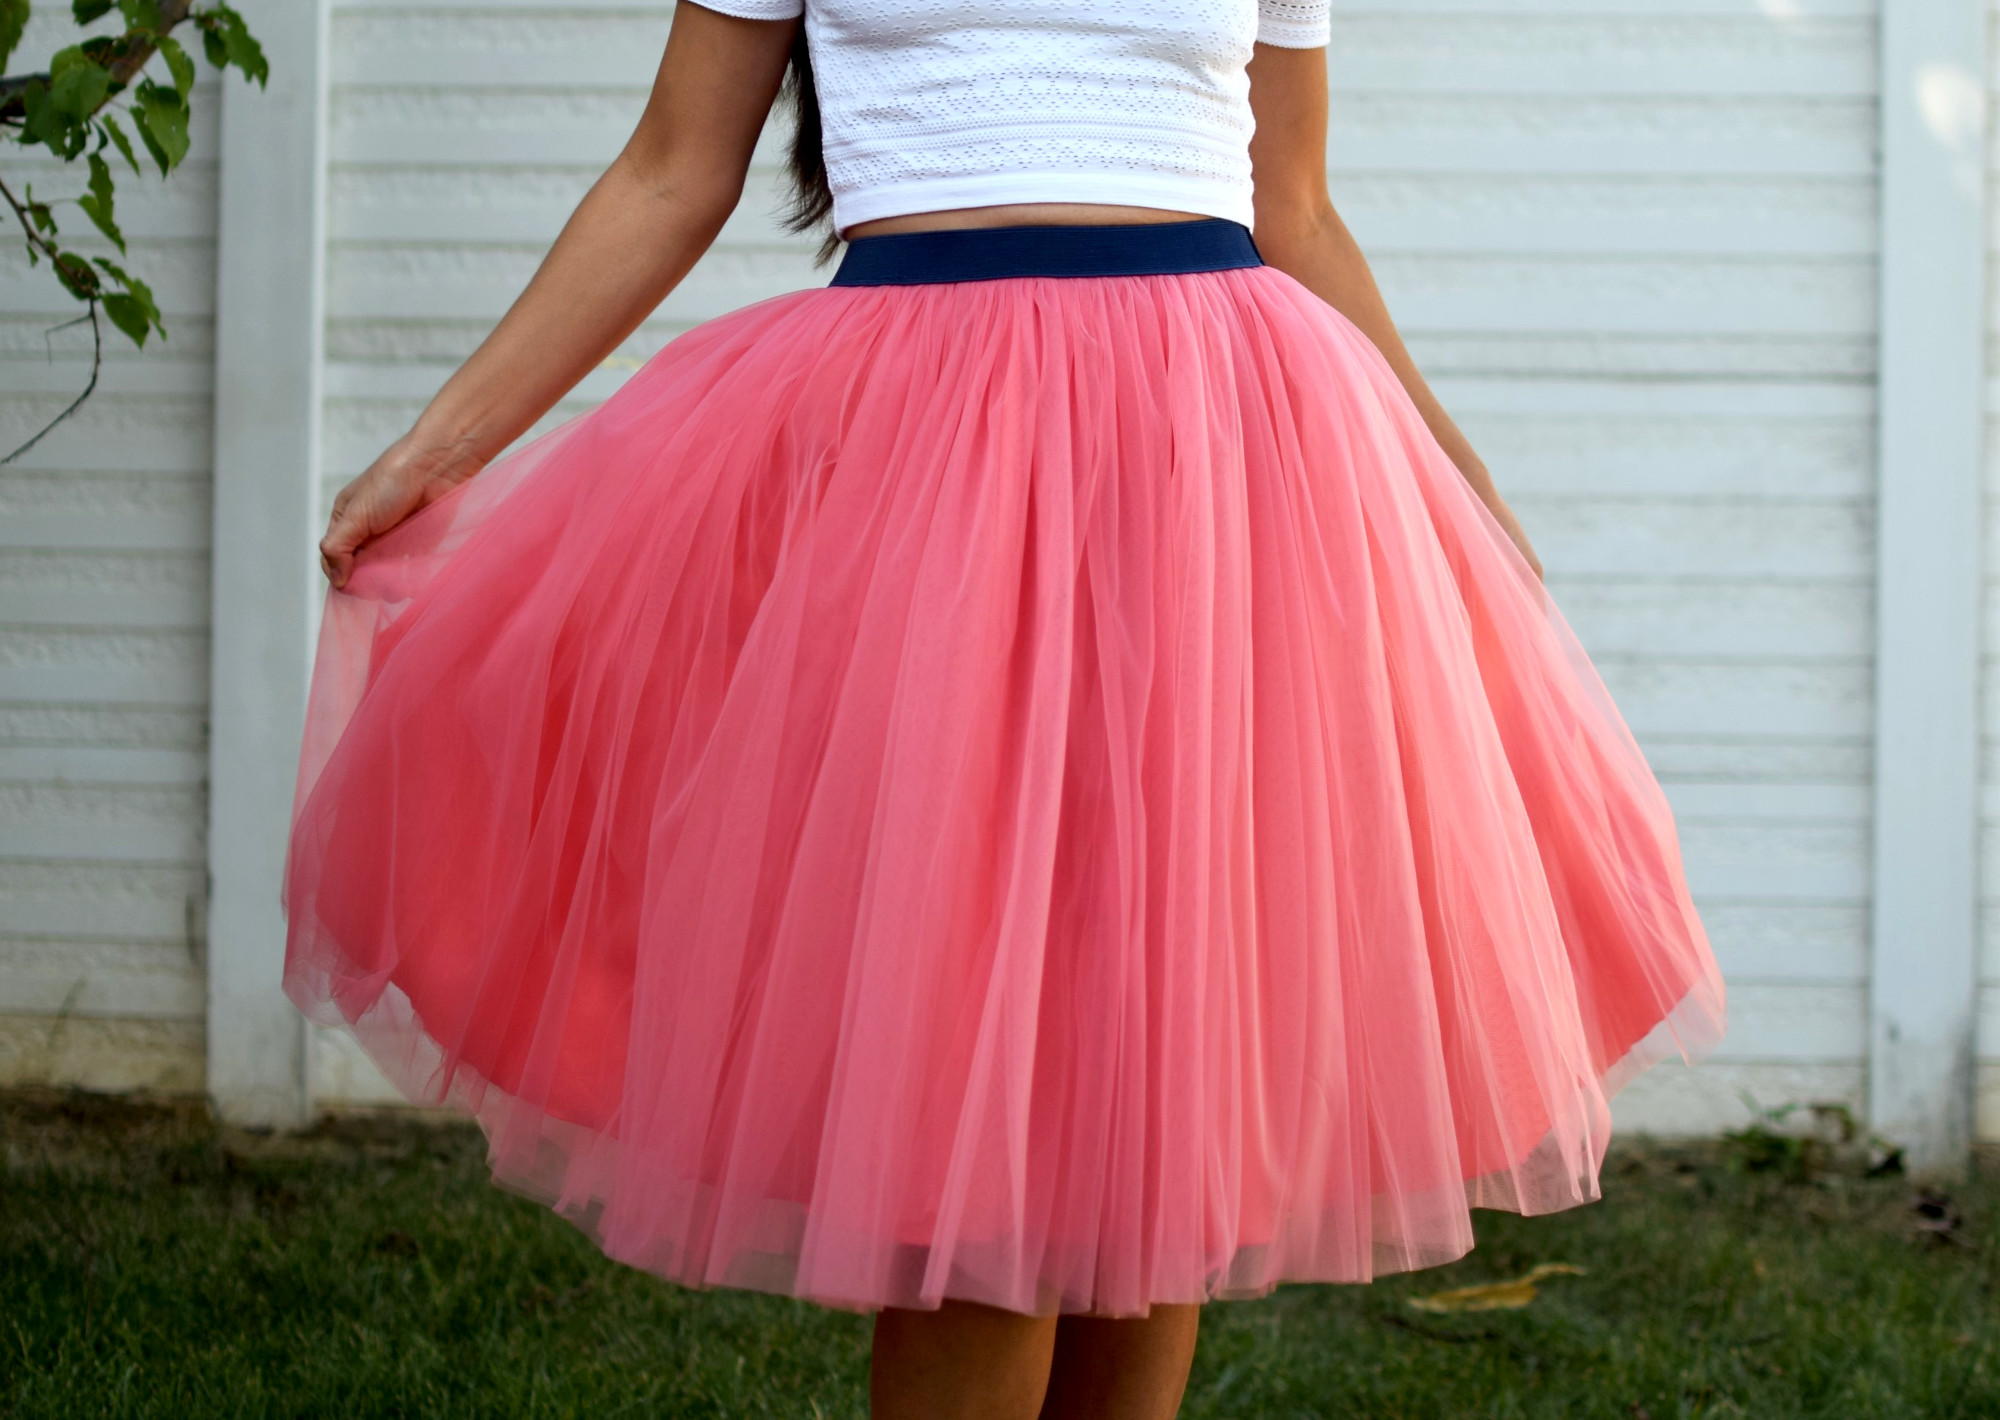 DIY Tulle Skirt Tutorial | AllFreeSewing.com